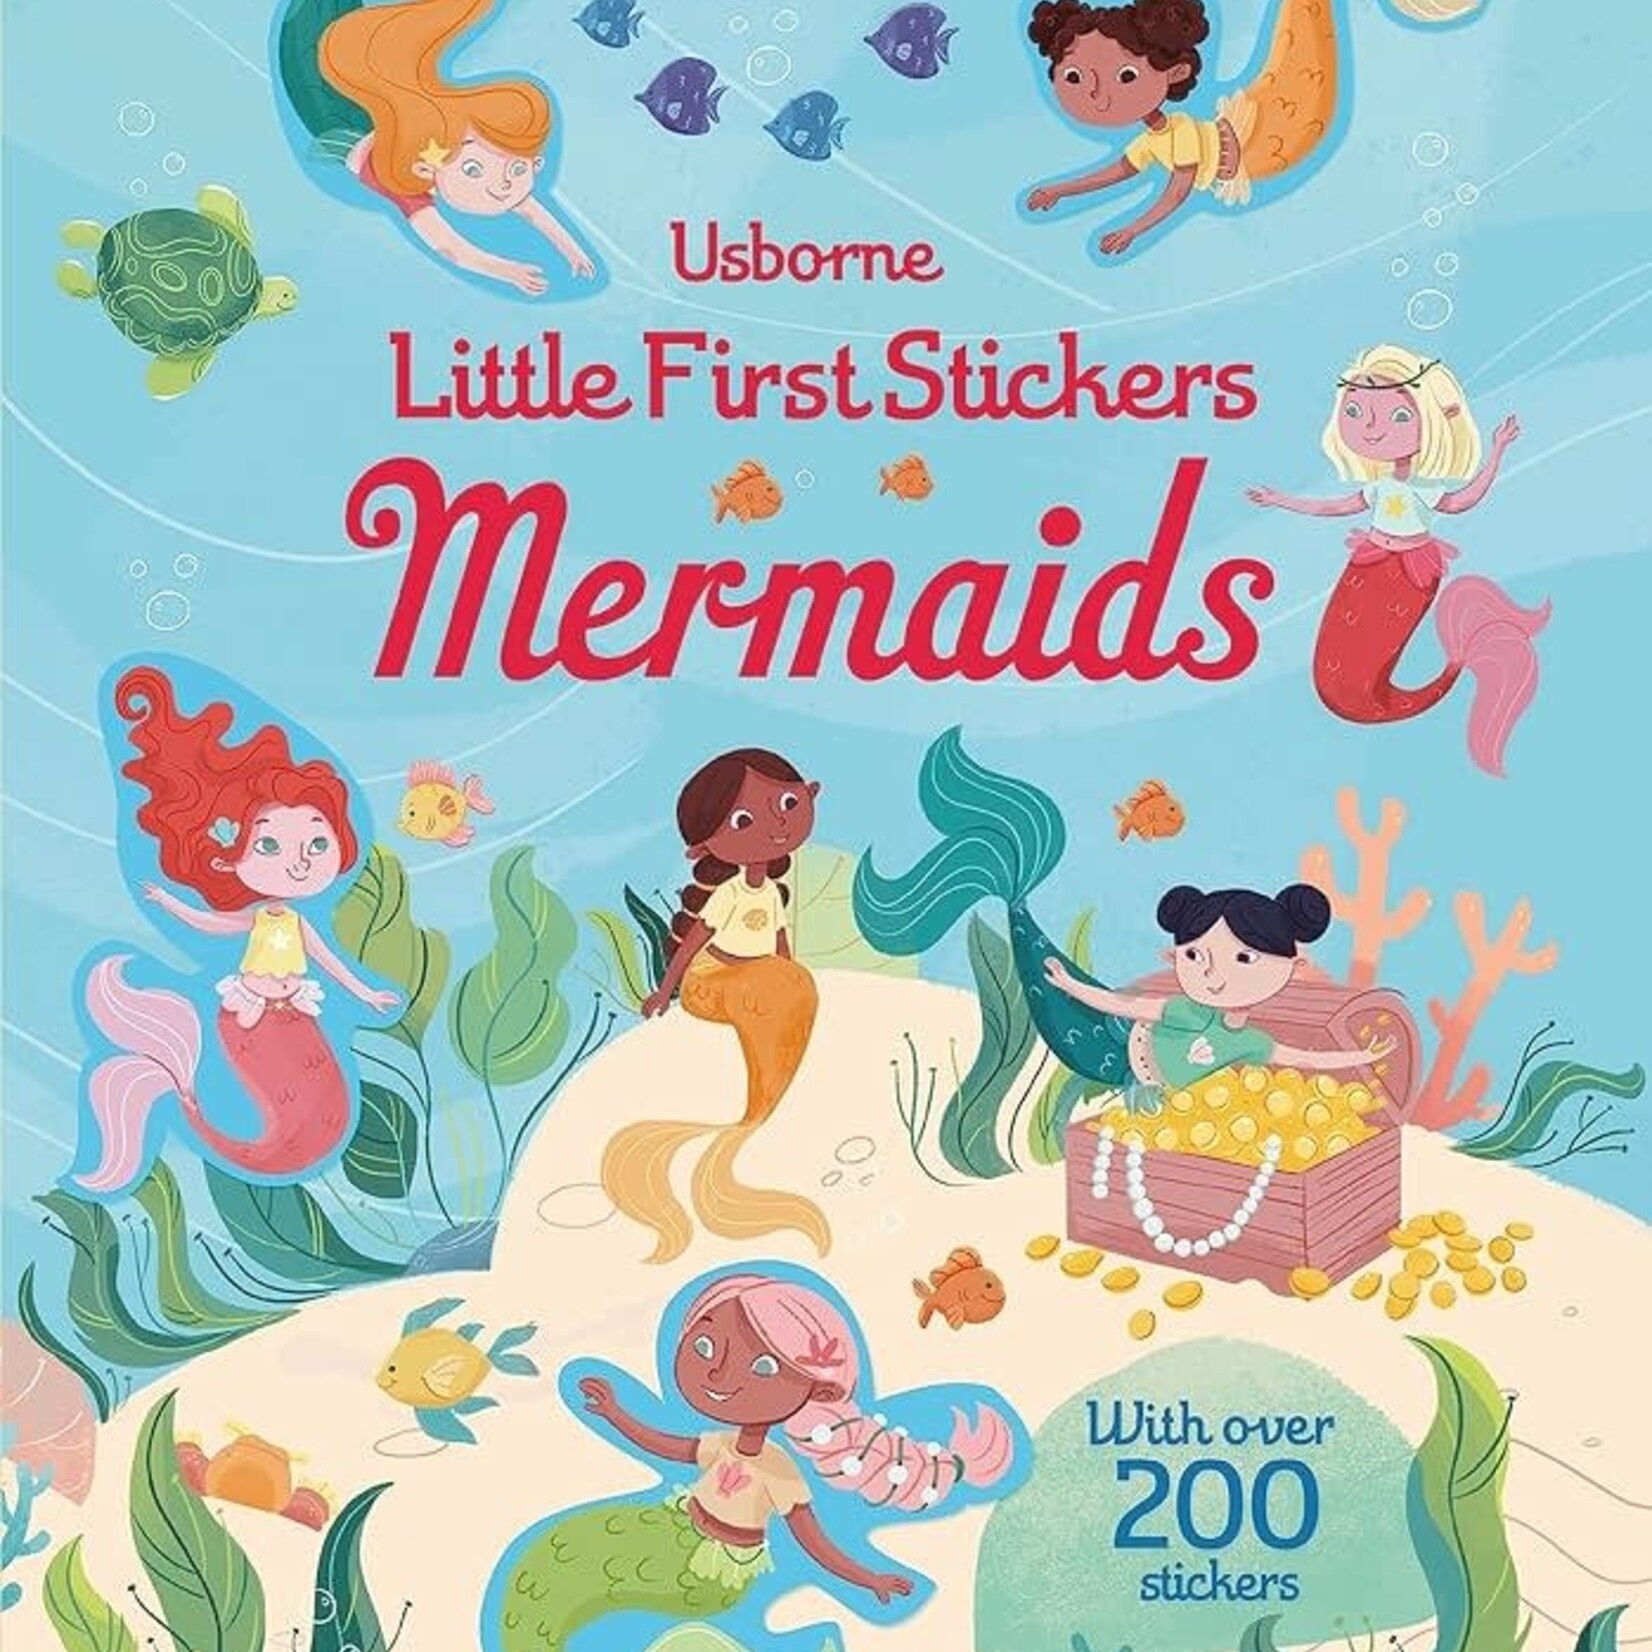 Usborne Little First Stickers Mermaids